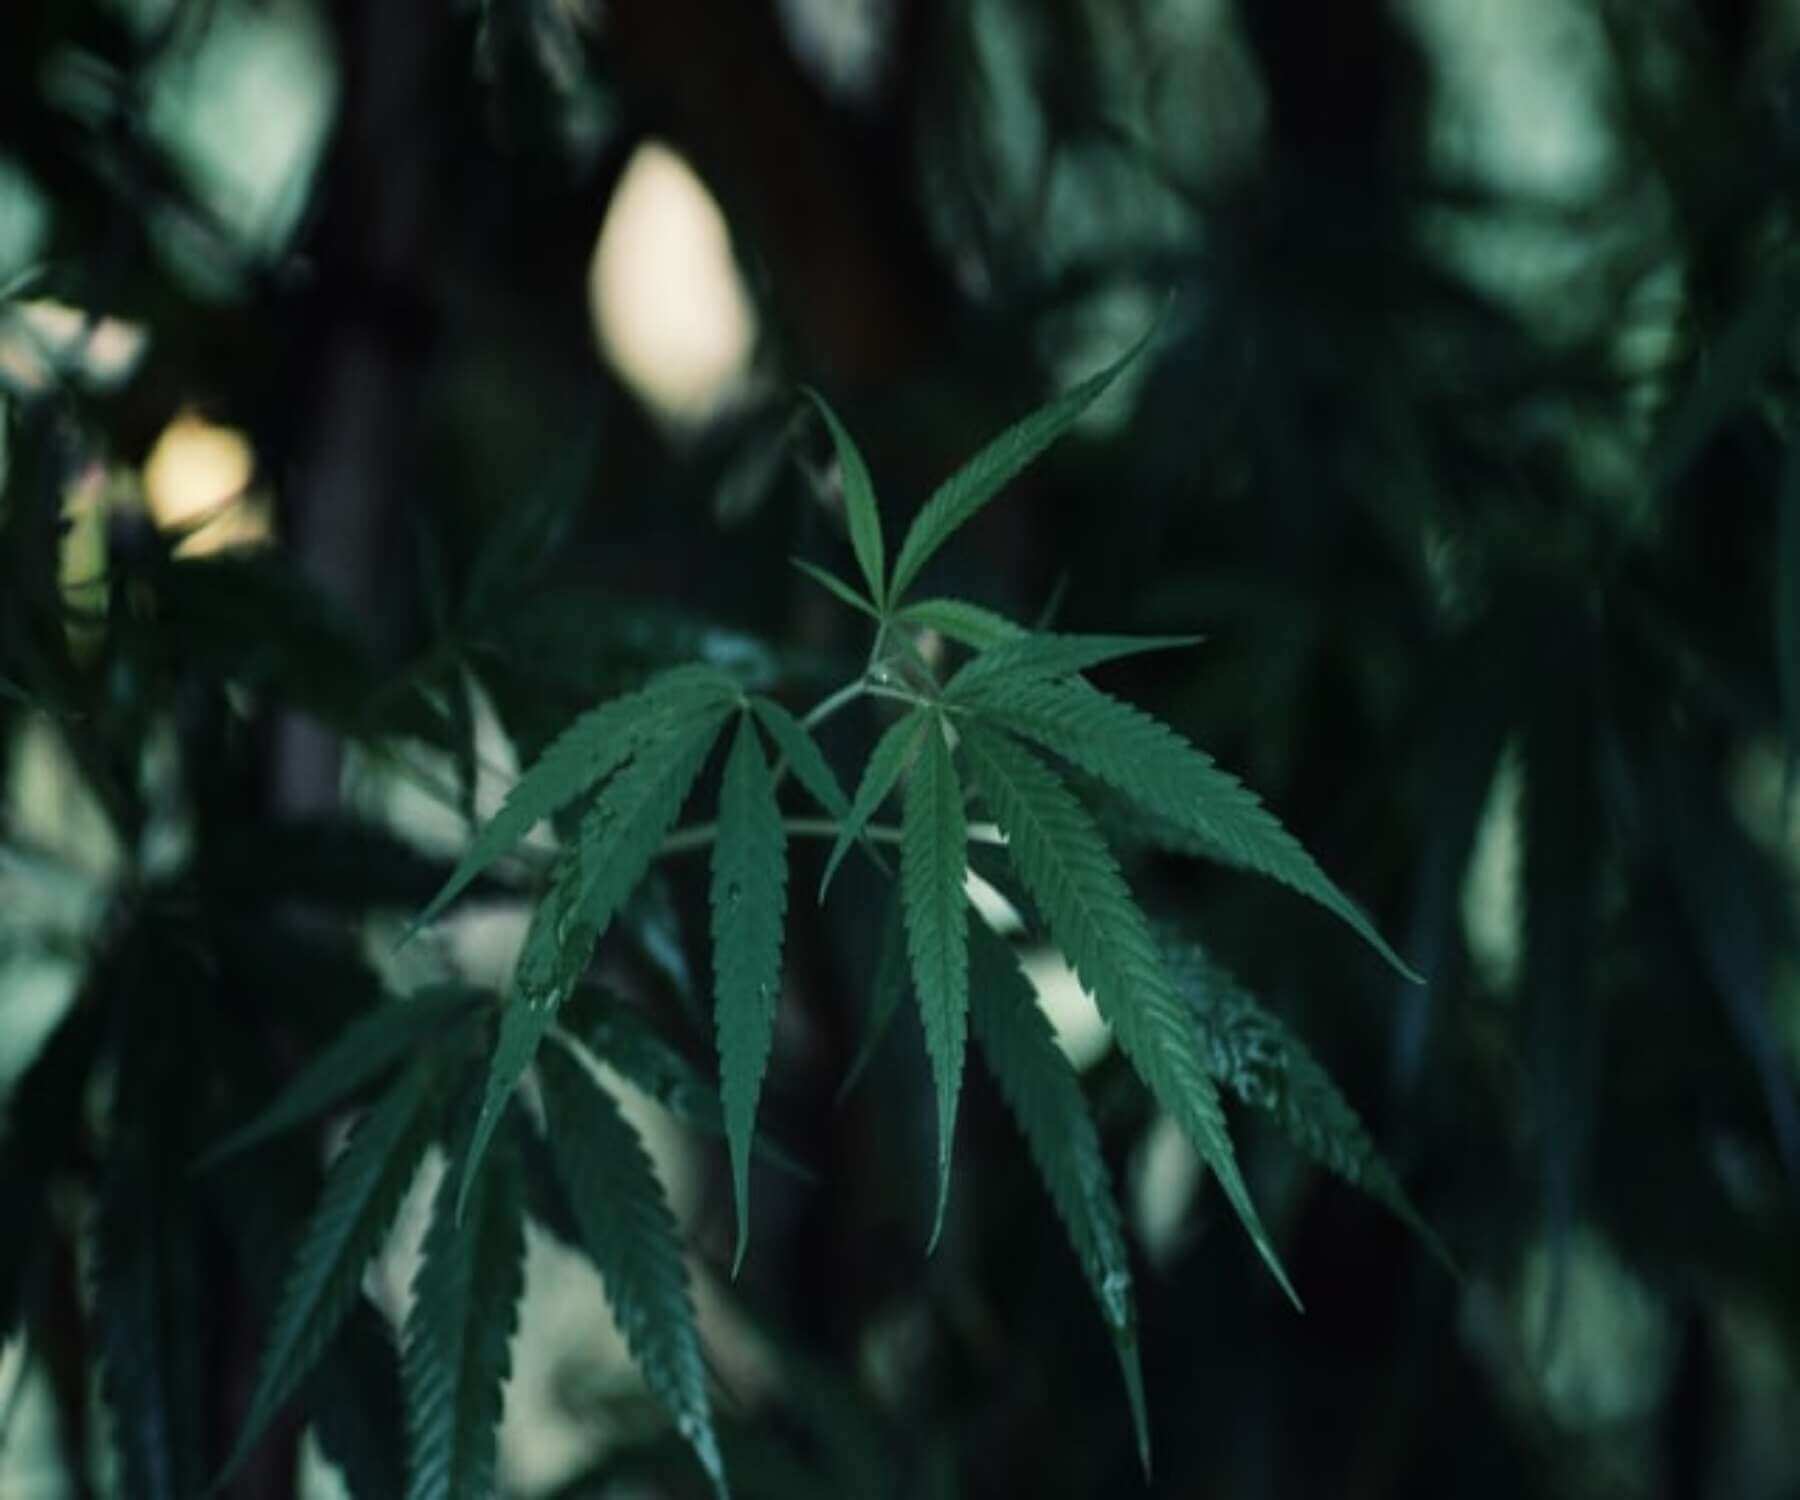 cannabis leaf in a hand